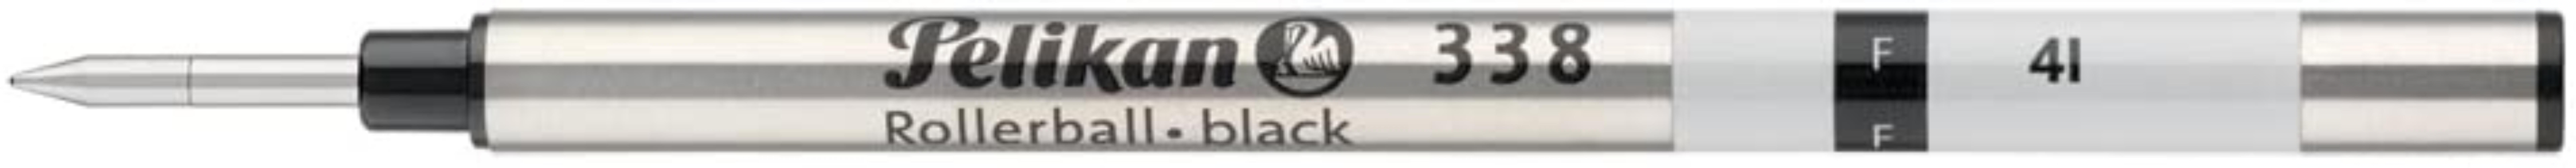 Pelikan  338 Black  Fine  Pt  Rollerball  Pen Refill New In  908483 